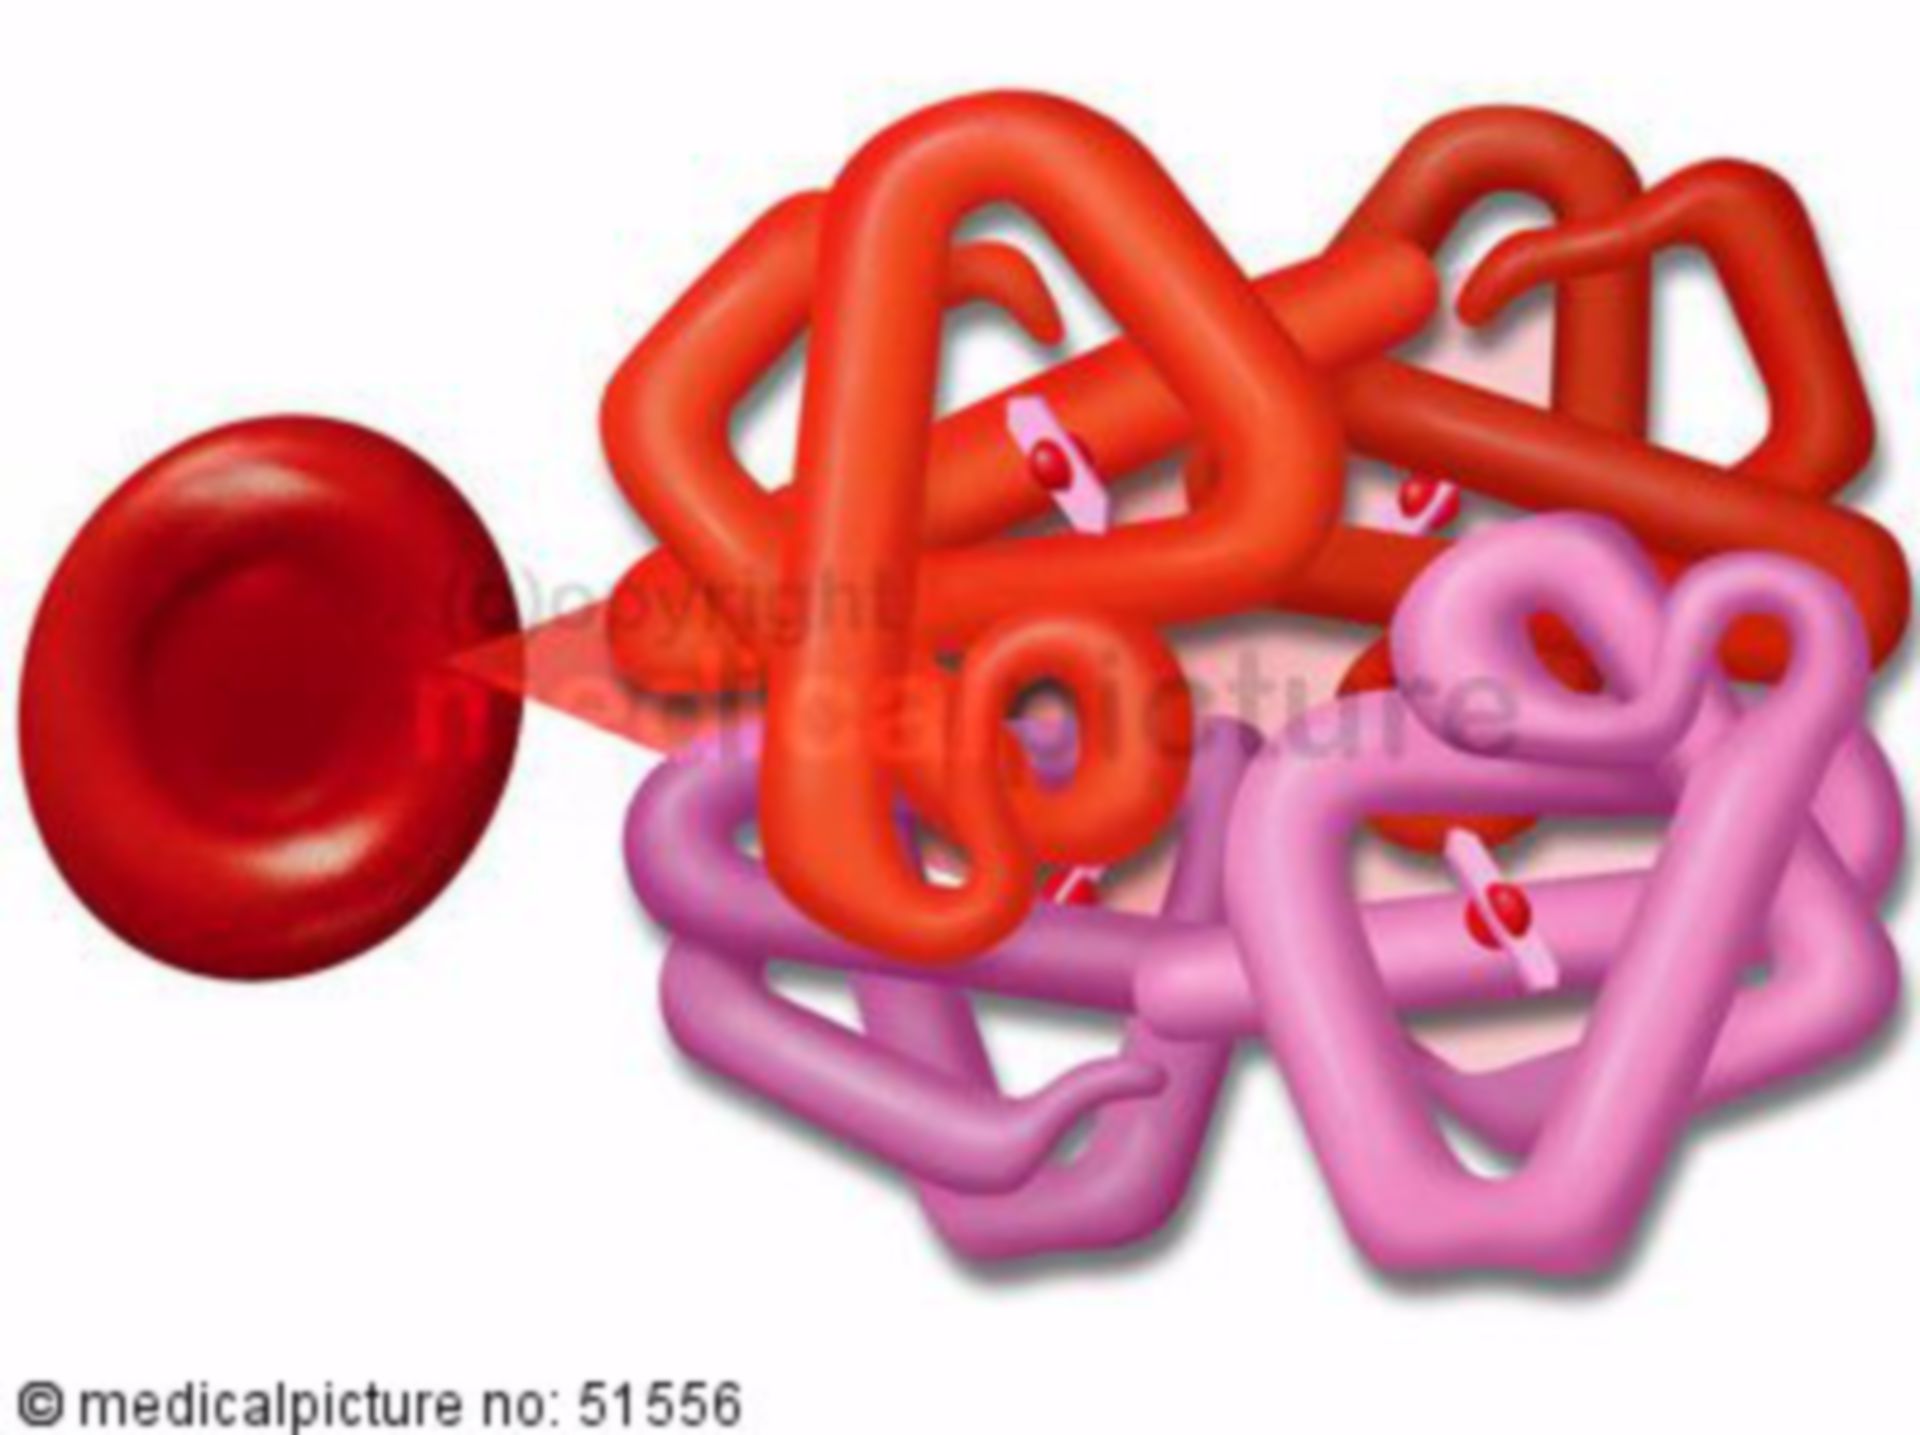  Rote Blutzelle mit Hämoglobin-Molekül 